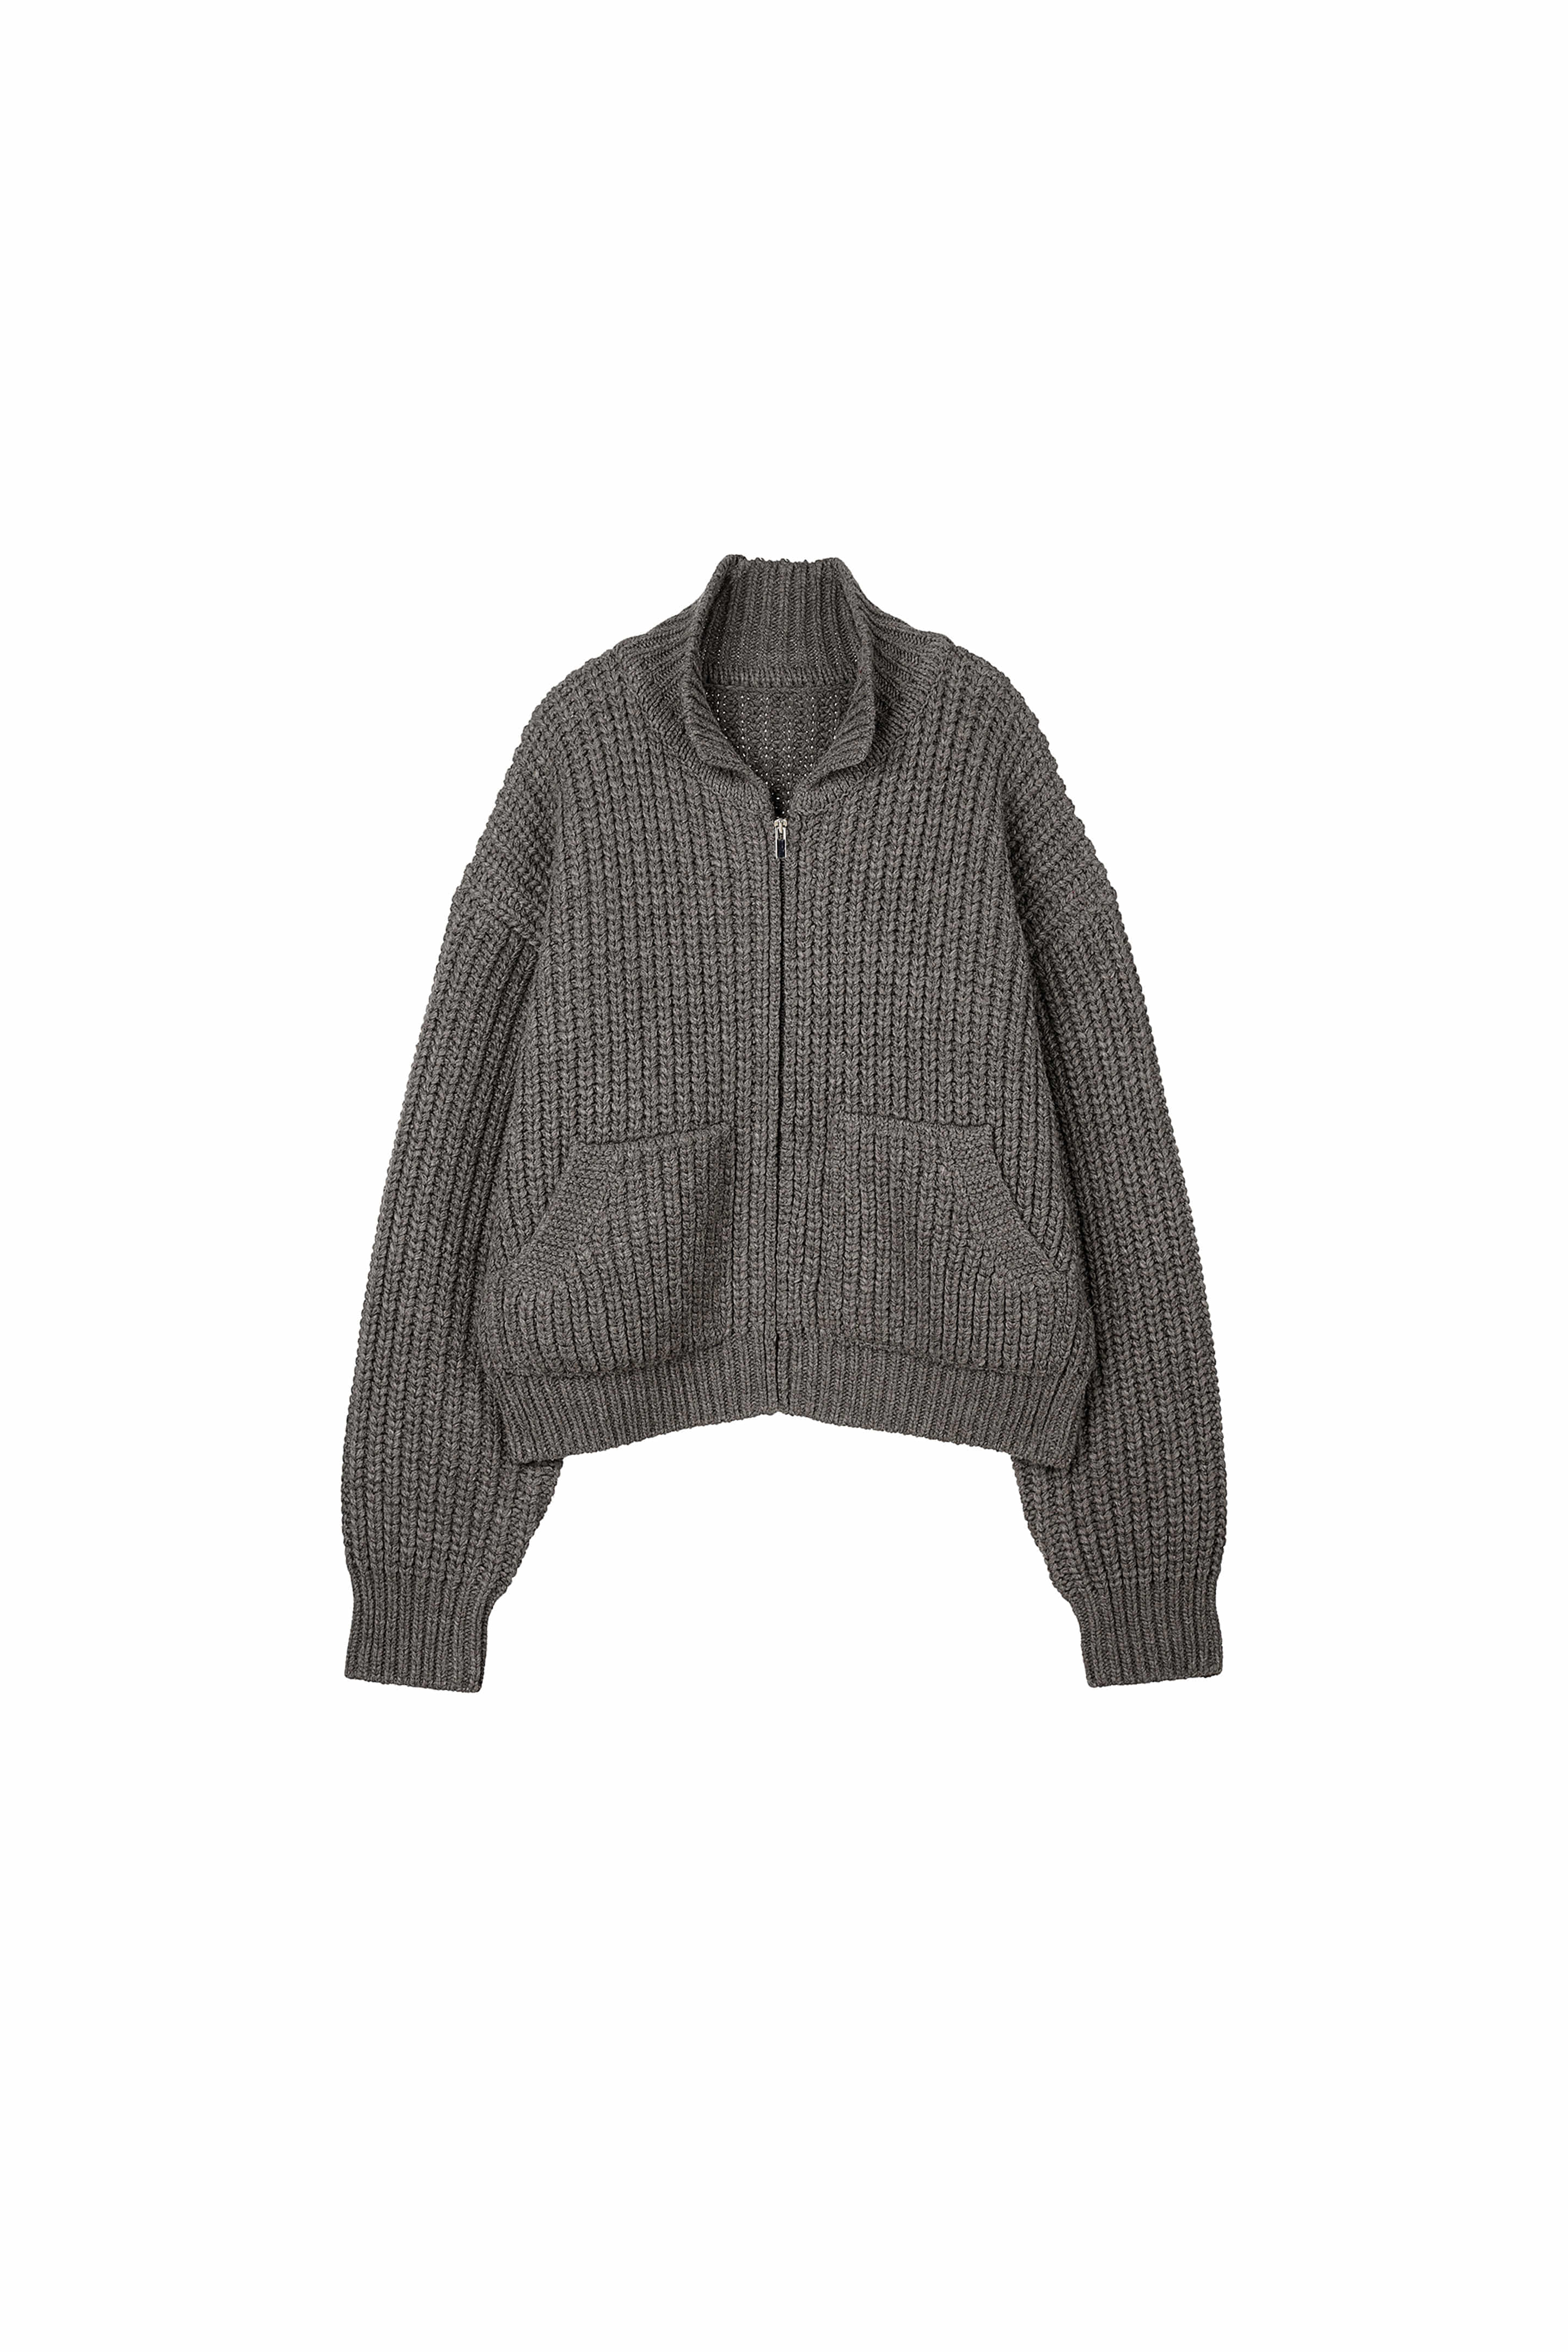 2nd) Marais Knitted Blouson Jacket Grey Brown [예약 발송 : 02.21(MON)]